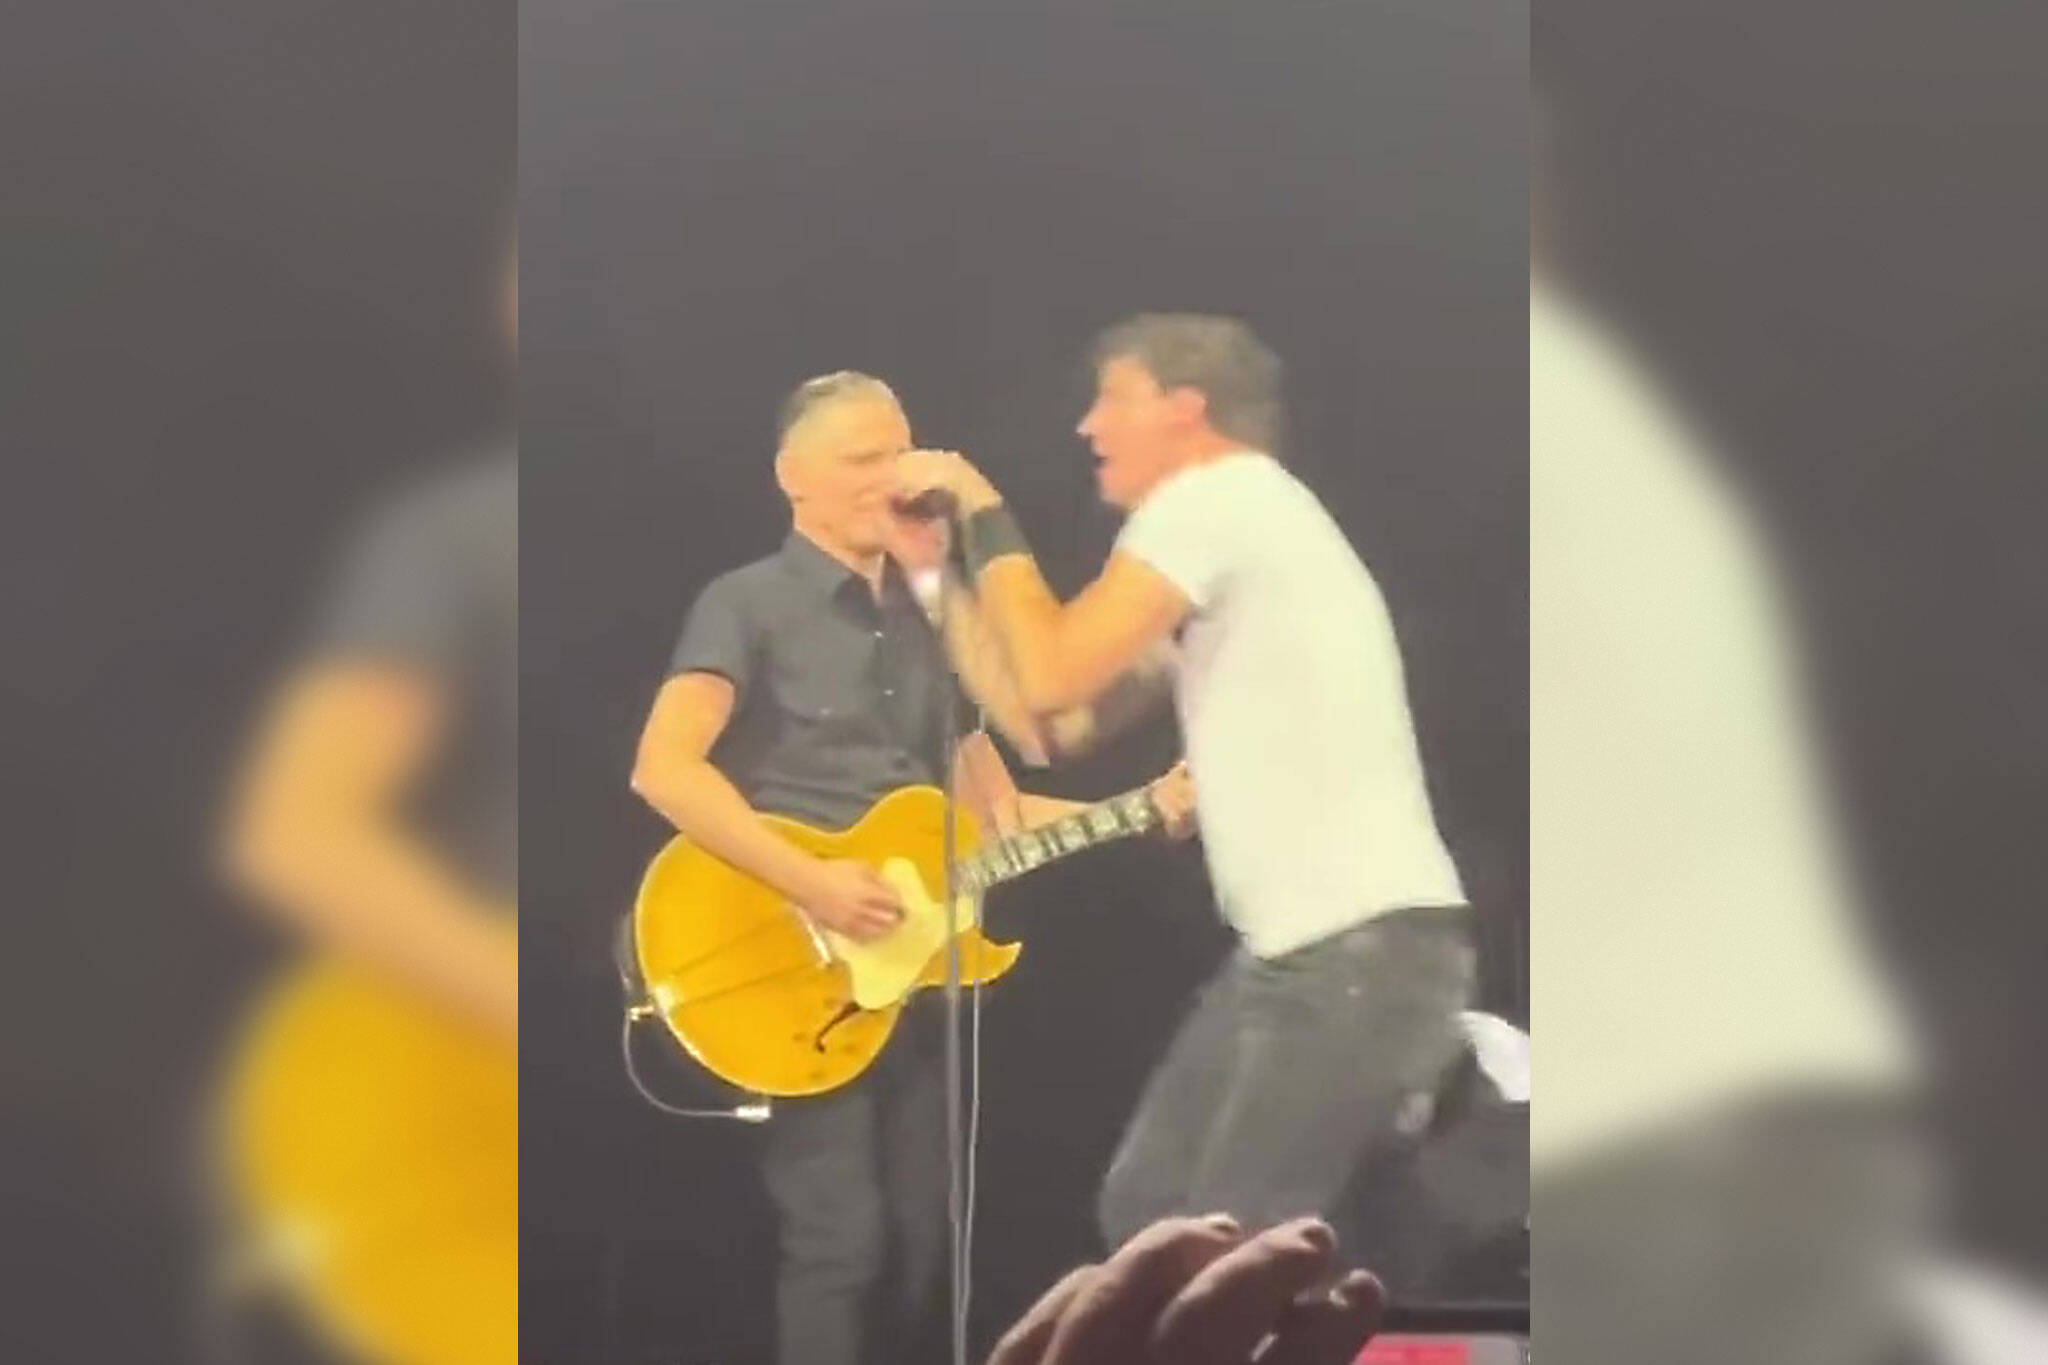 Ontario rock legend Bryan Adams goes viral for handling of drunk fan